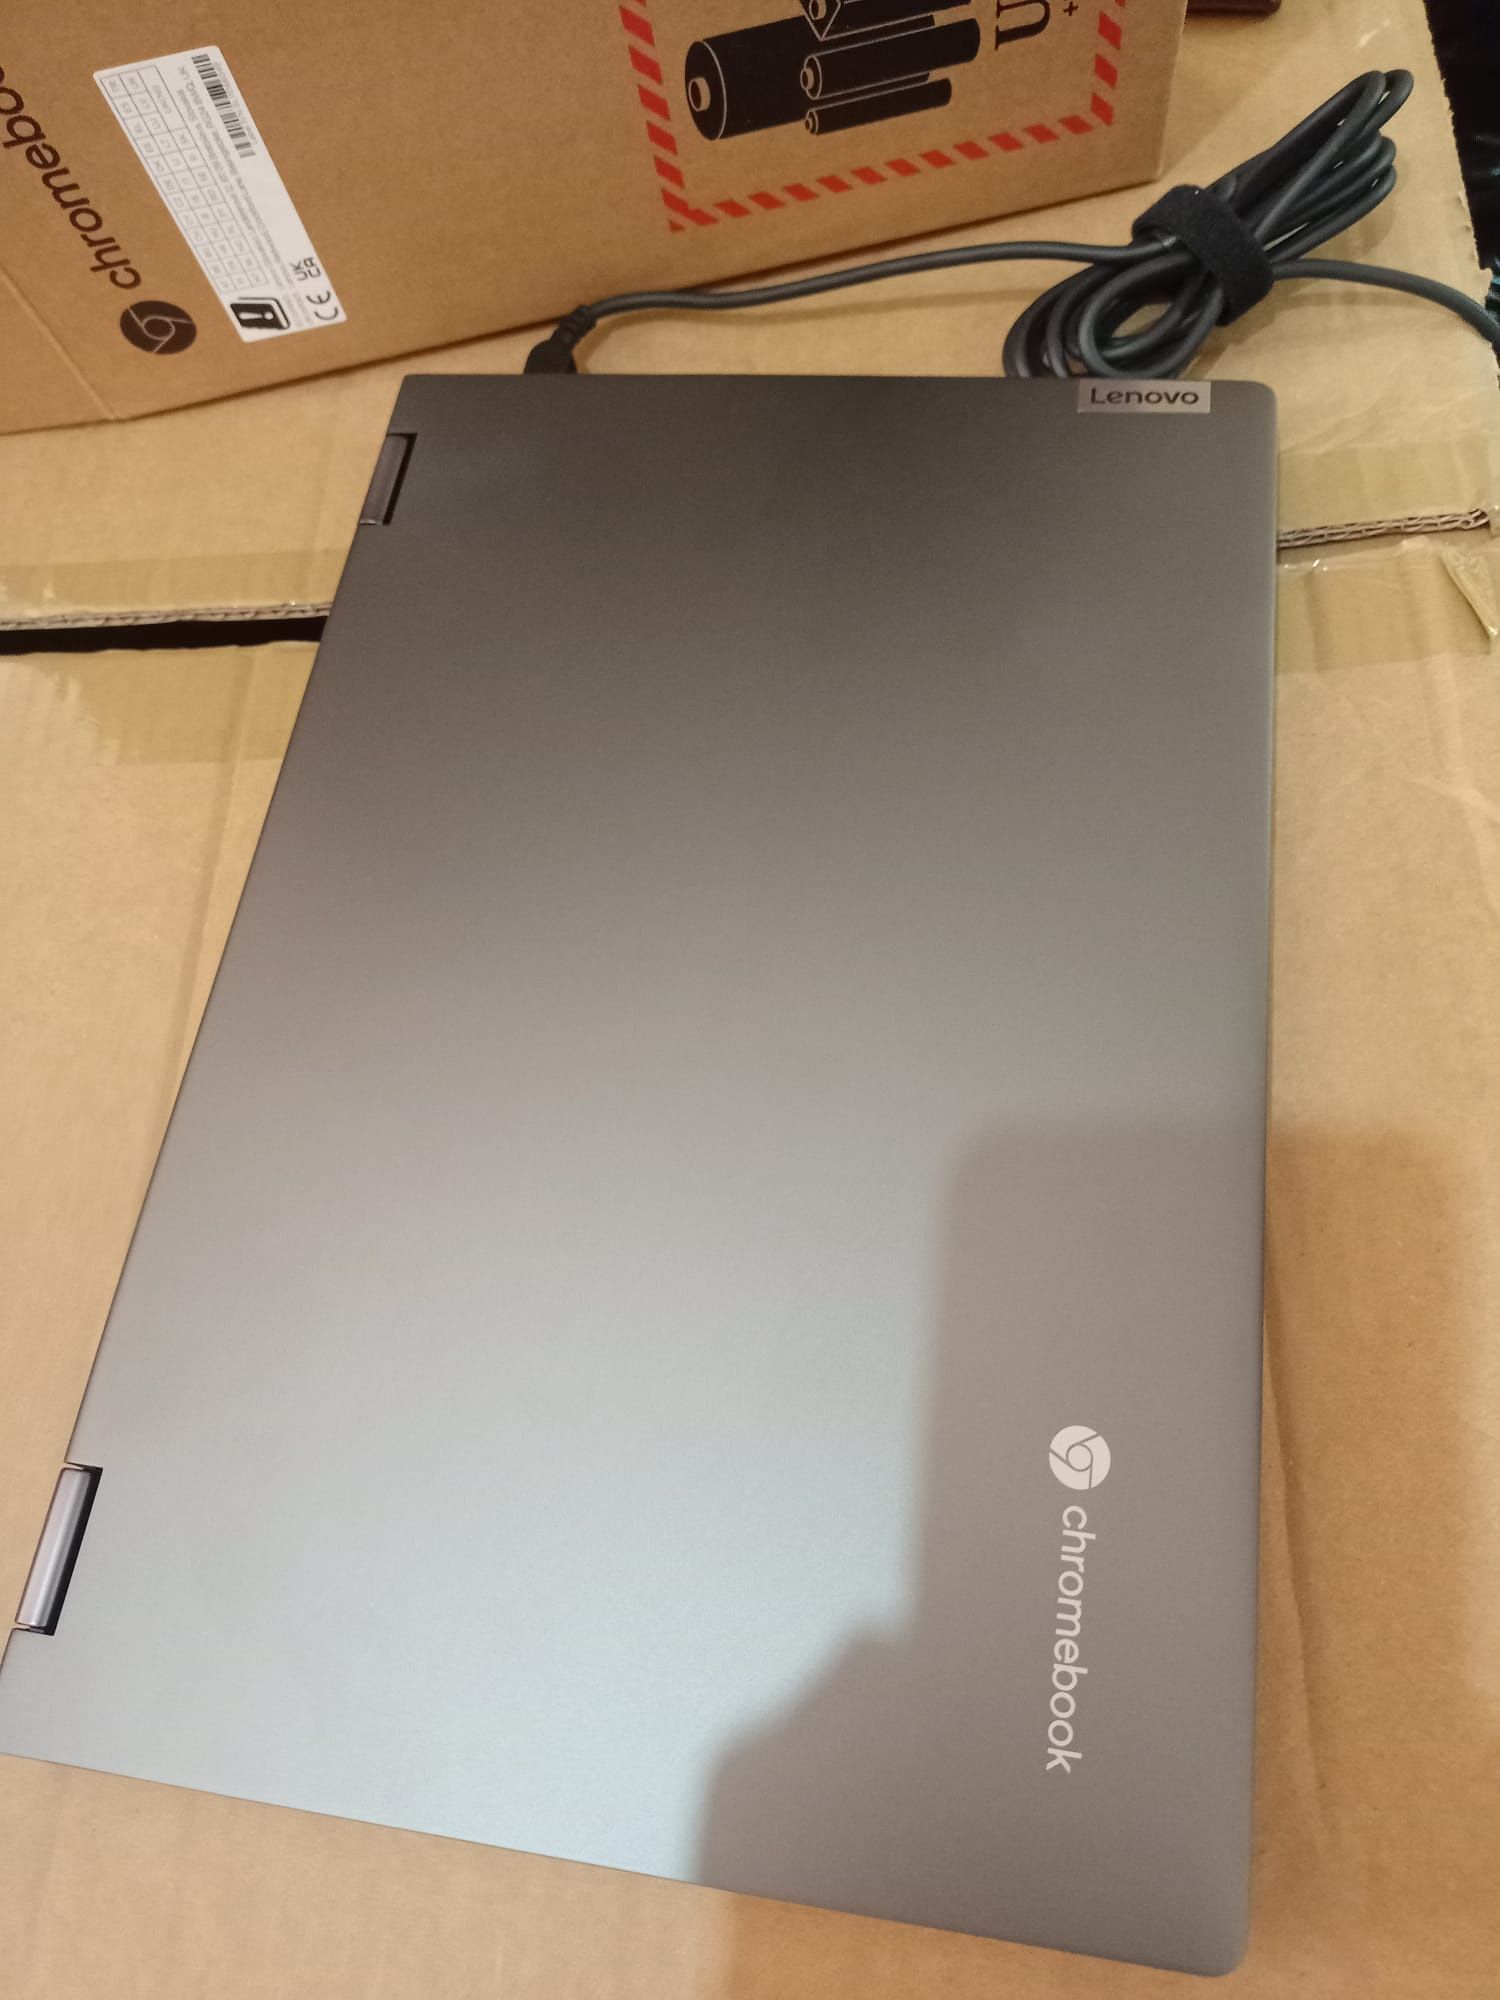 Laptop Lenovo IdeaPad Flex5 I3-1115G4 3.0 GHz